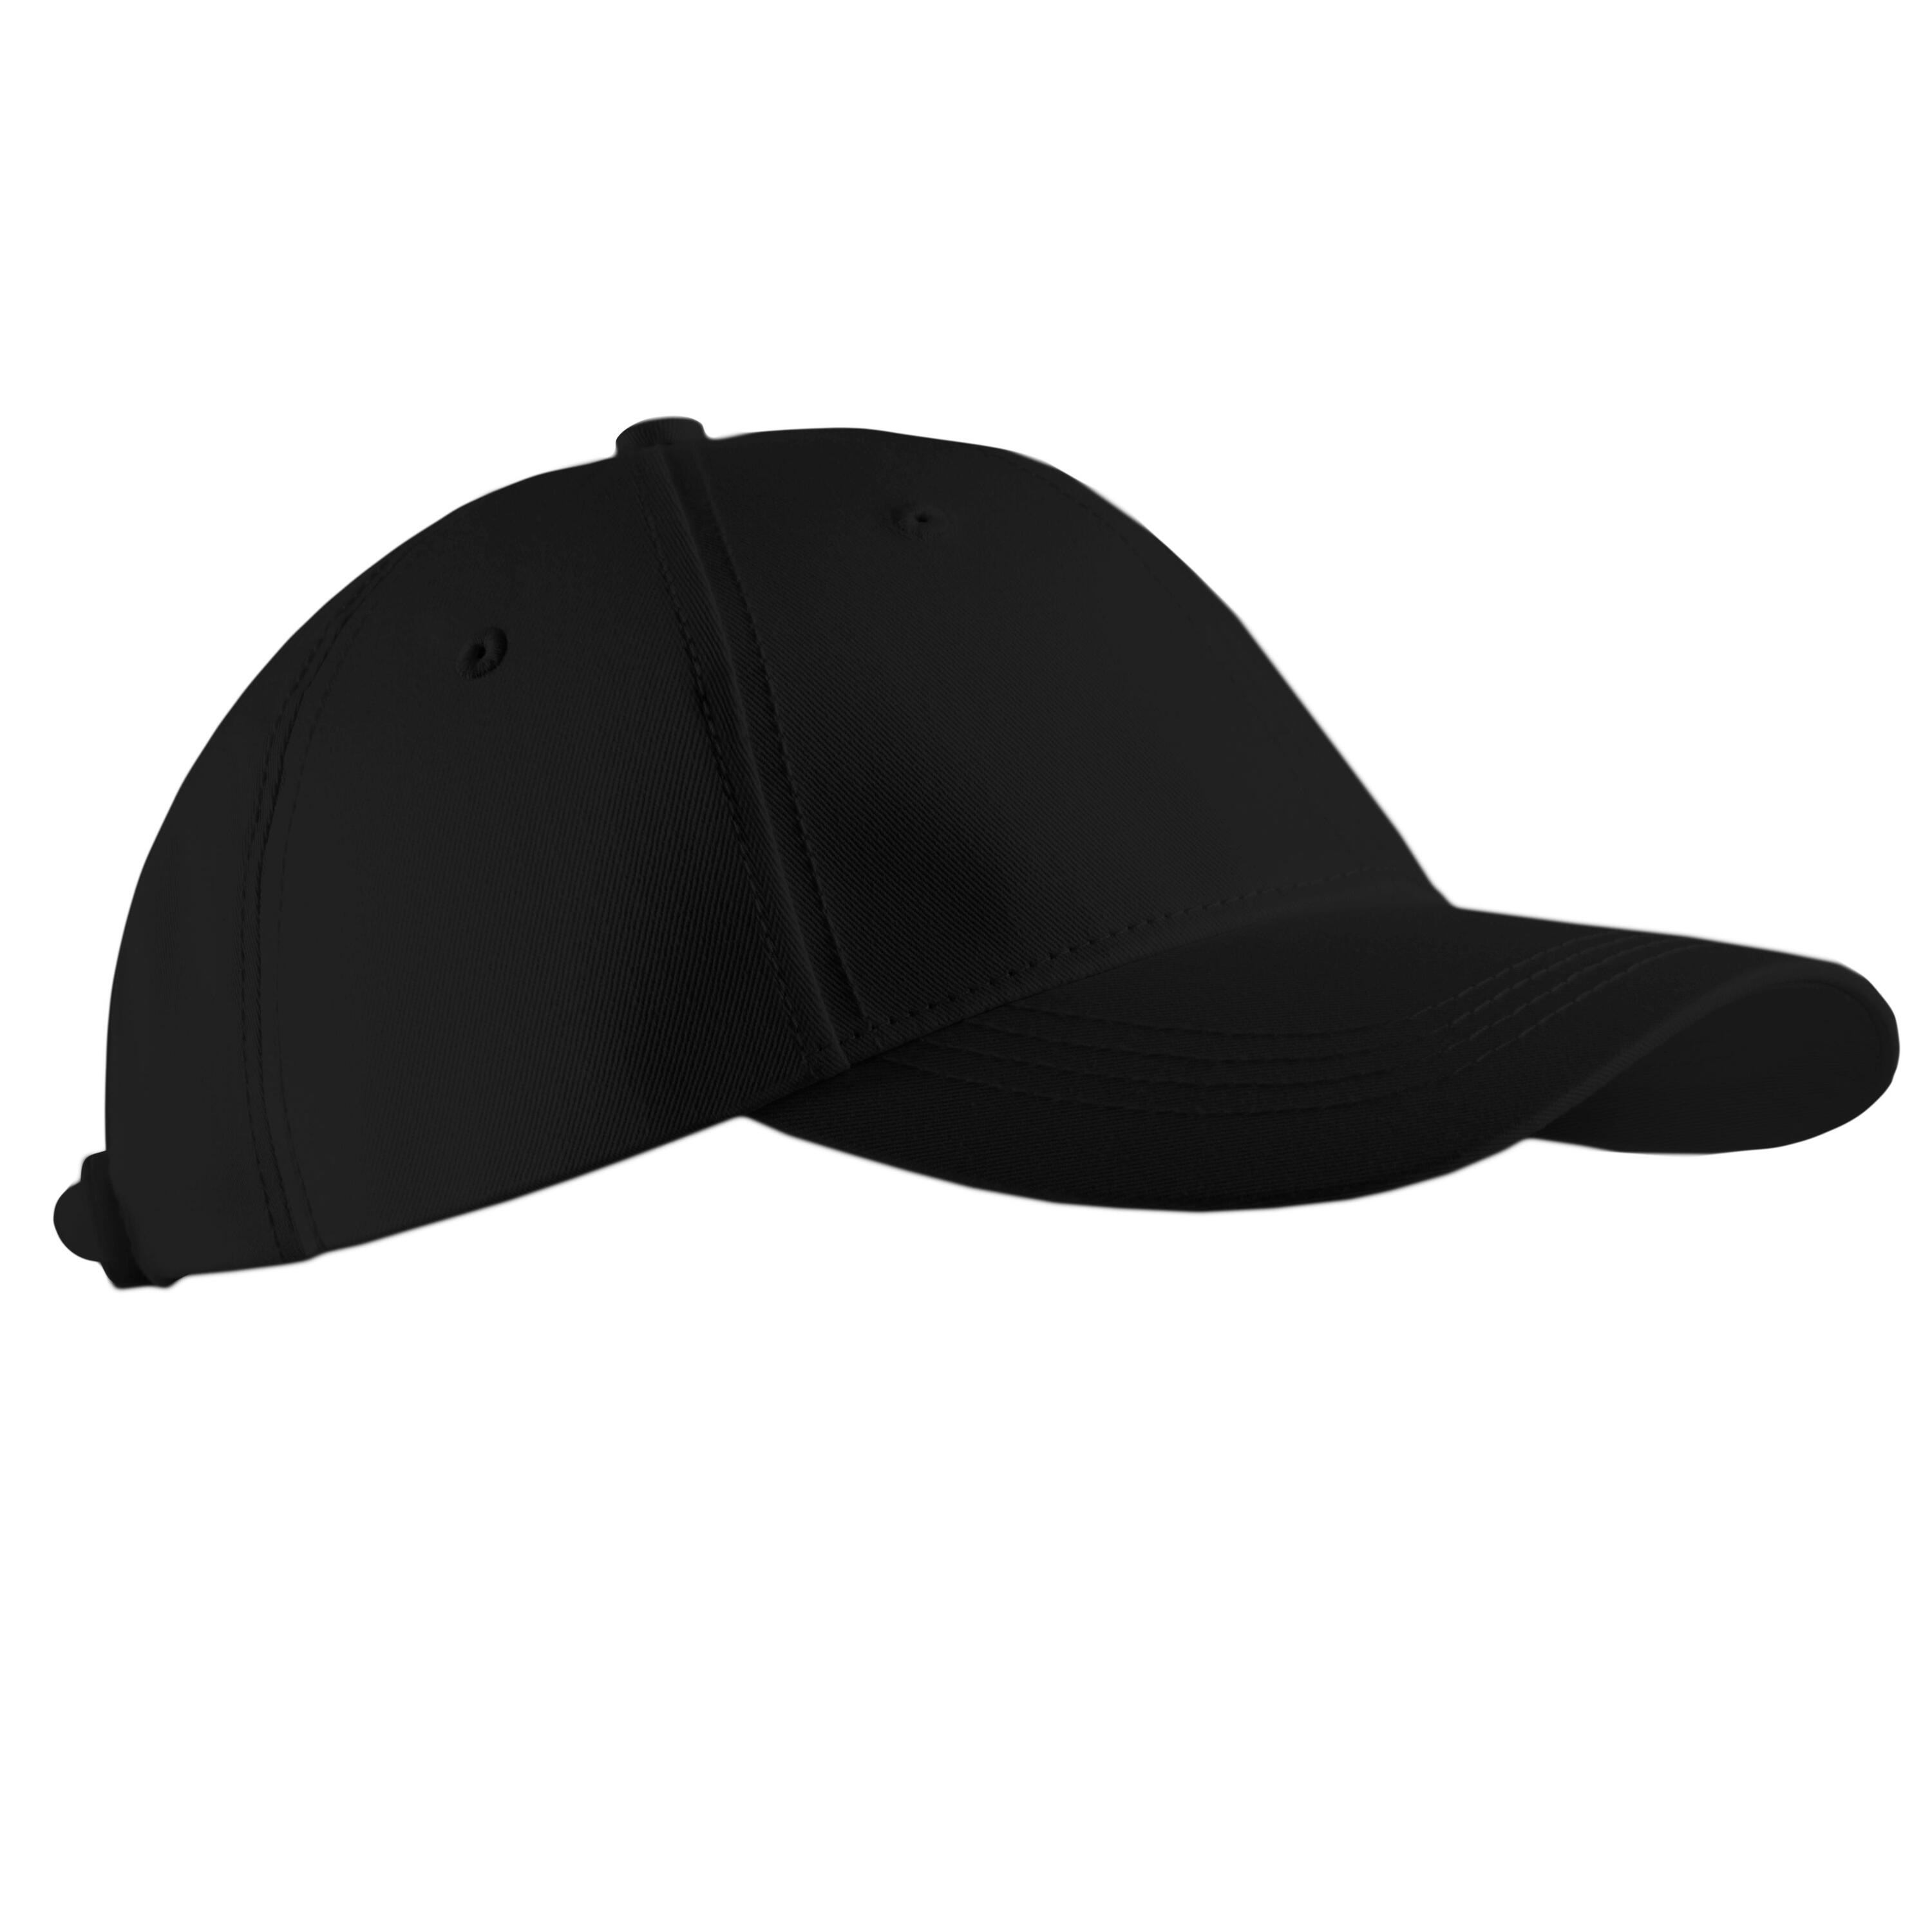 Adult's golf cap - MW 500 black 2/5